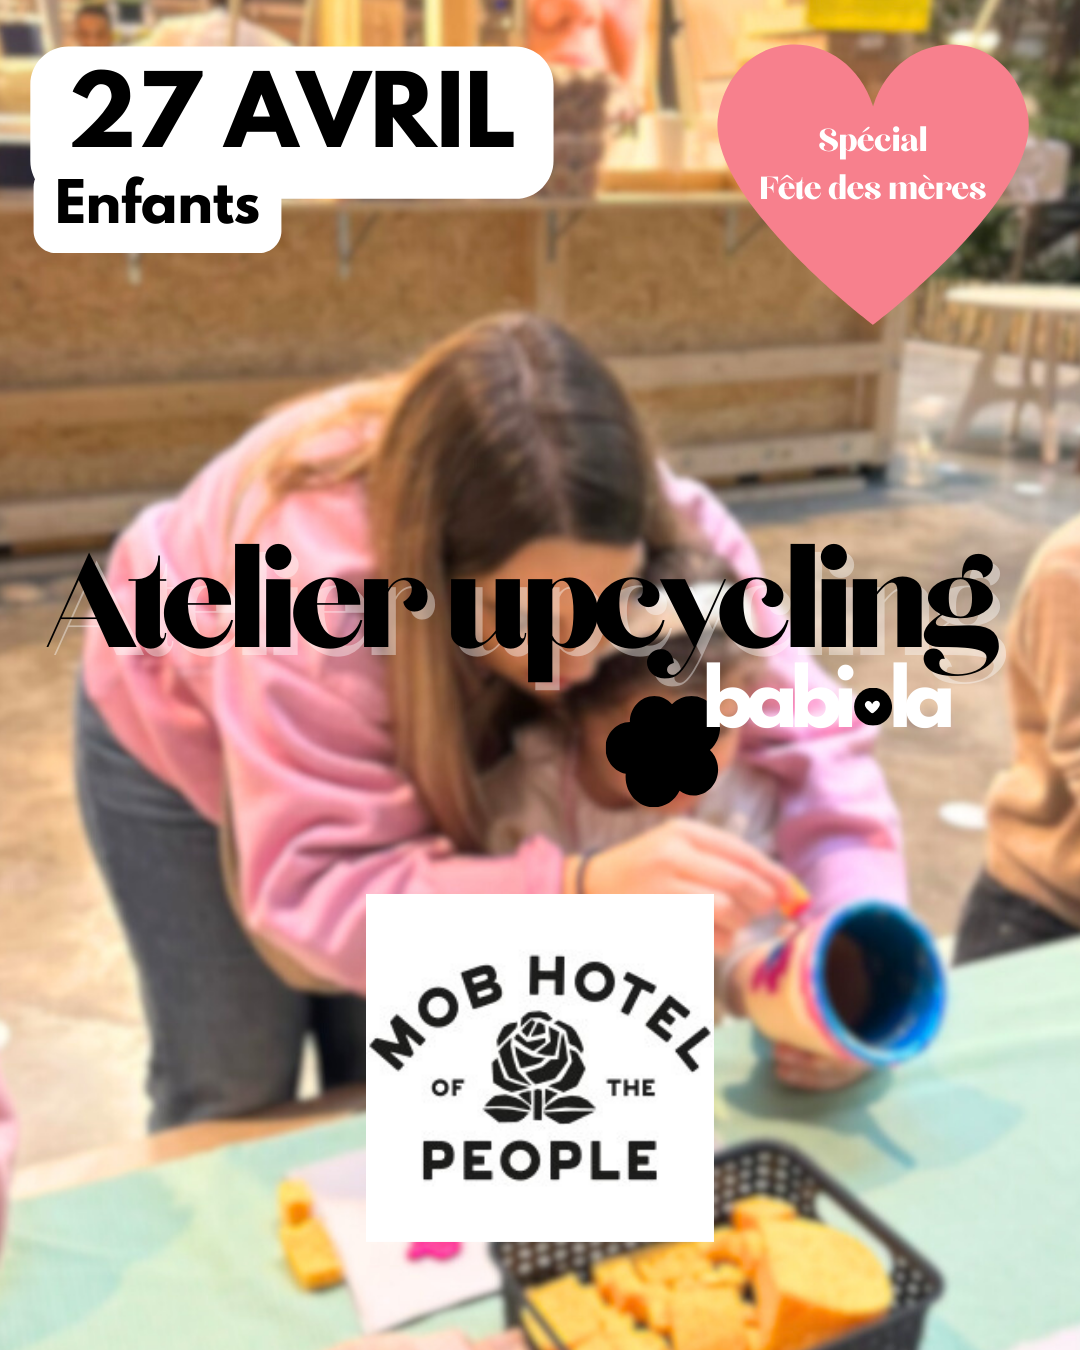 Atelier Upcycling ENFANT - 27 AVRIL - MOB HOTEL Saint Ouen